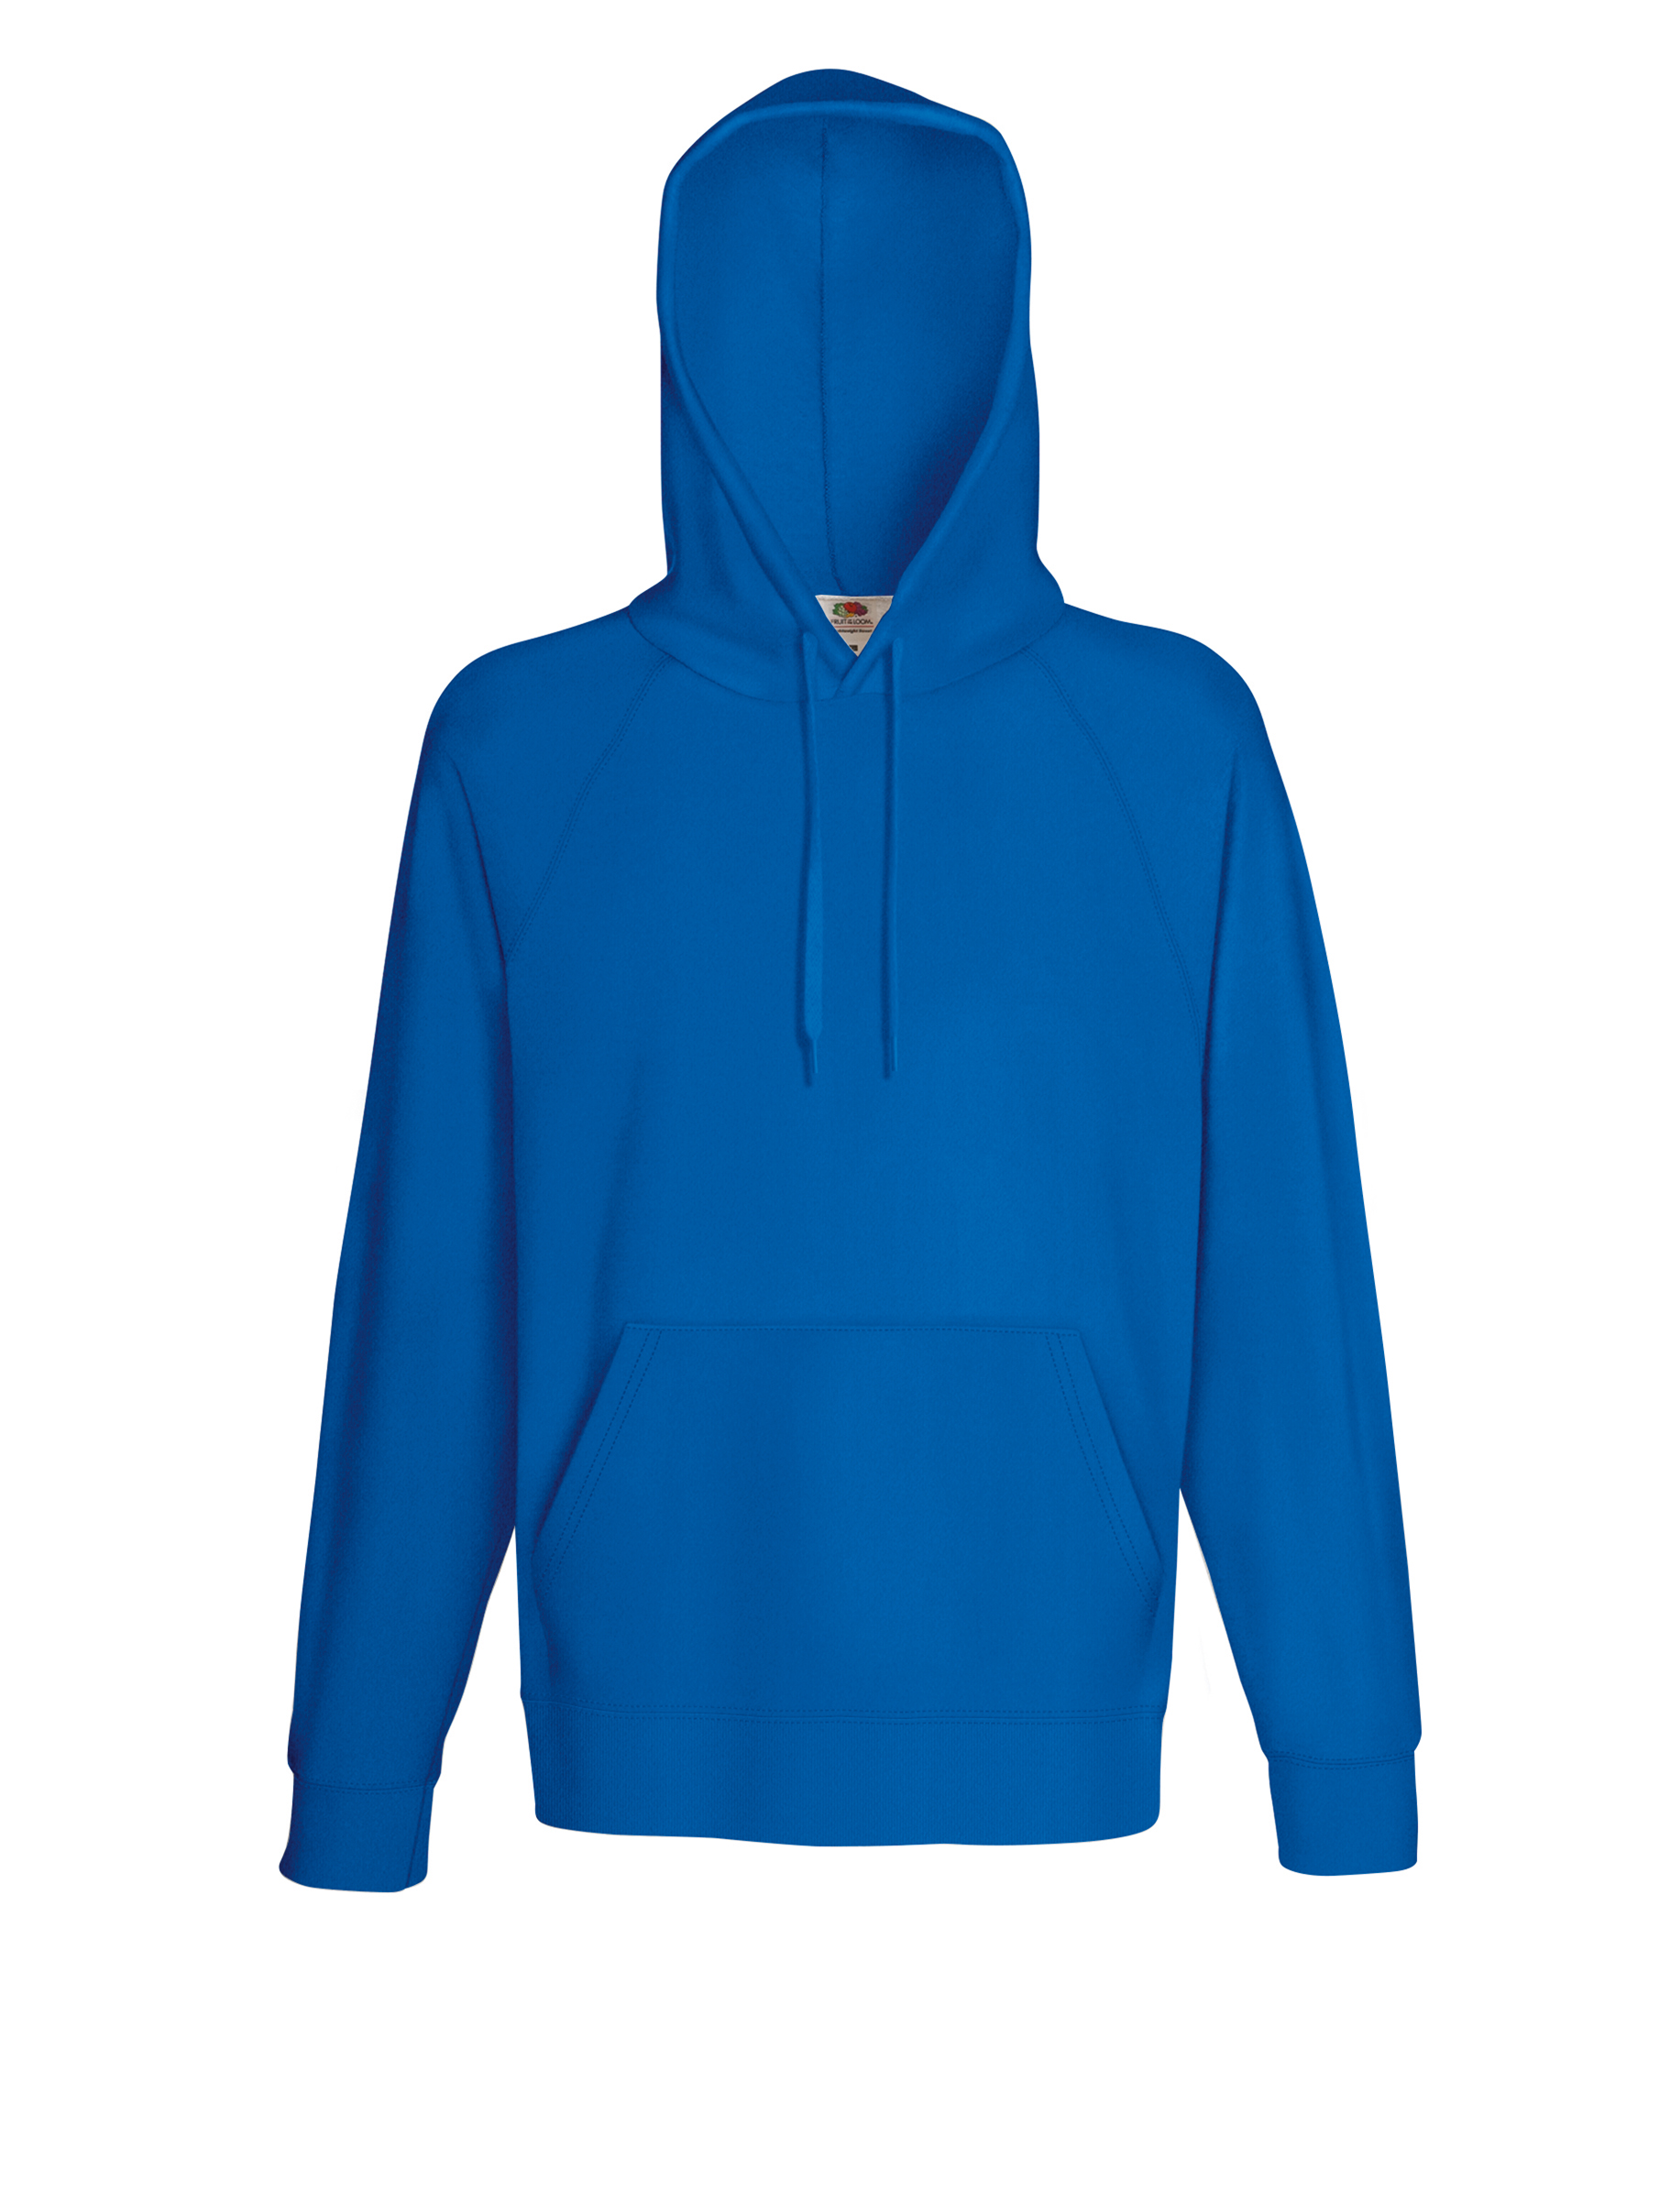 ax-httpswebsystems.s3.amazonaws.comtmp_for_downloadfruit-of-the-loom-lightweight-hooded-sweatshirt-royal-blue.jpeg